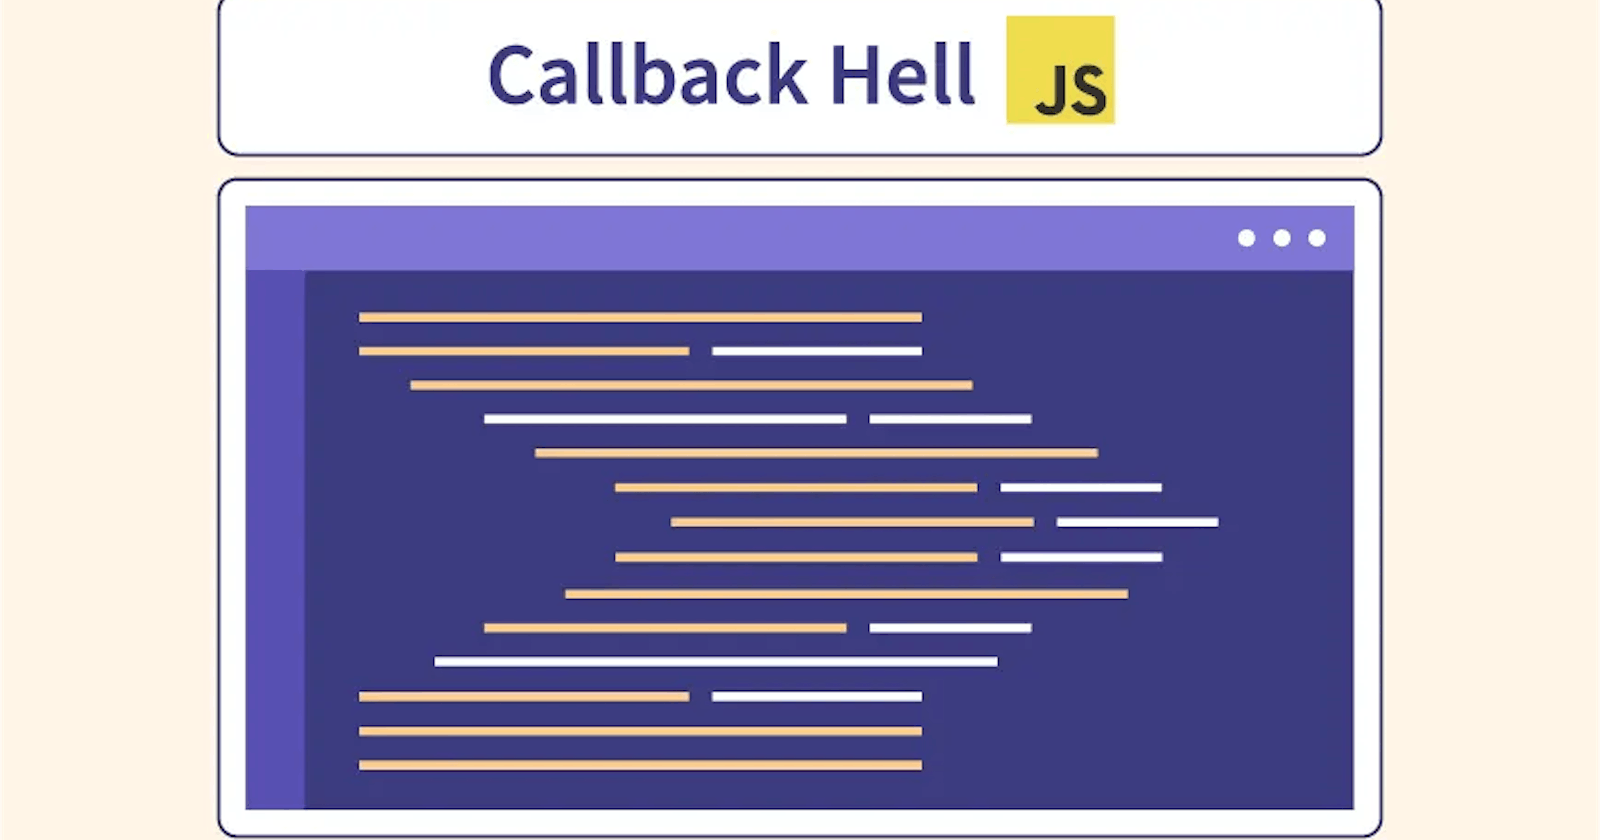 Callback Hell(Pyramid of the Doom):